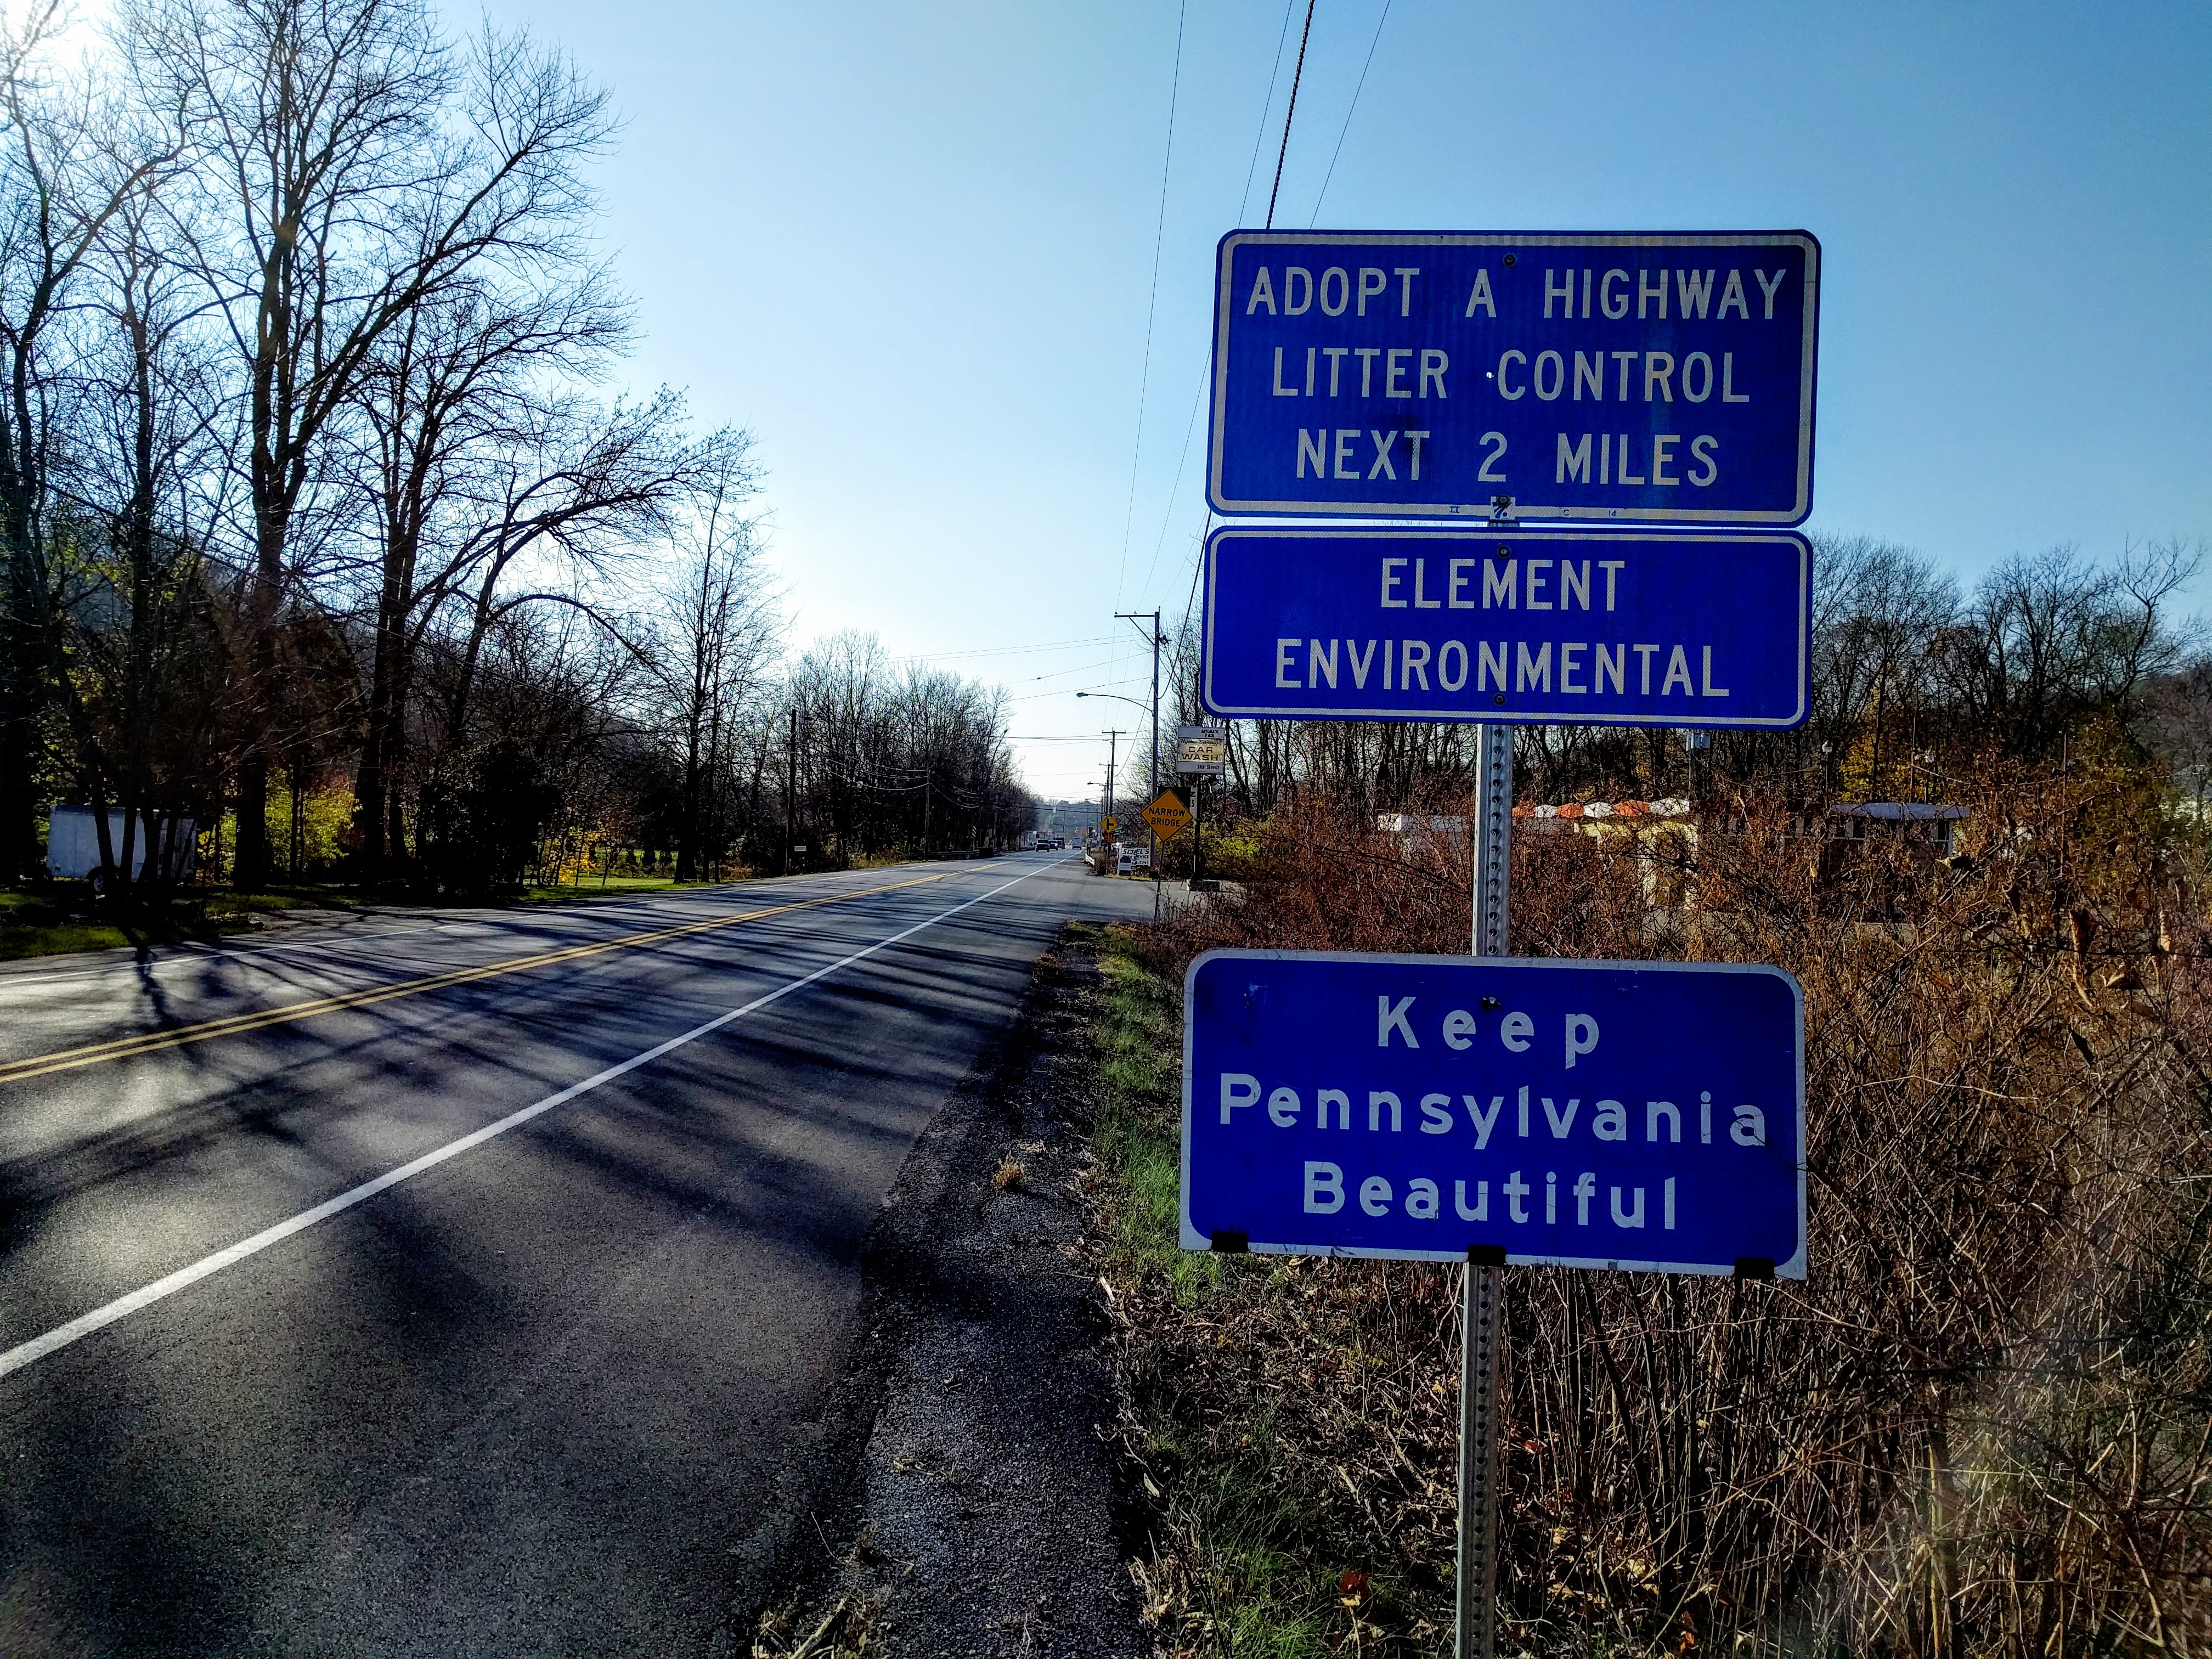 https://e2s.us/wp-content/uploads/2015/11/E2S_Adopt-a-highway.jpg